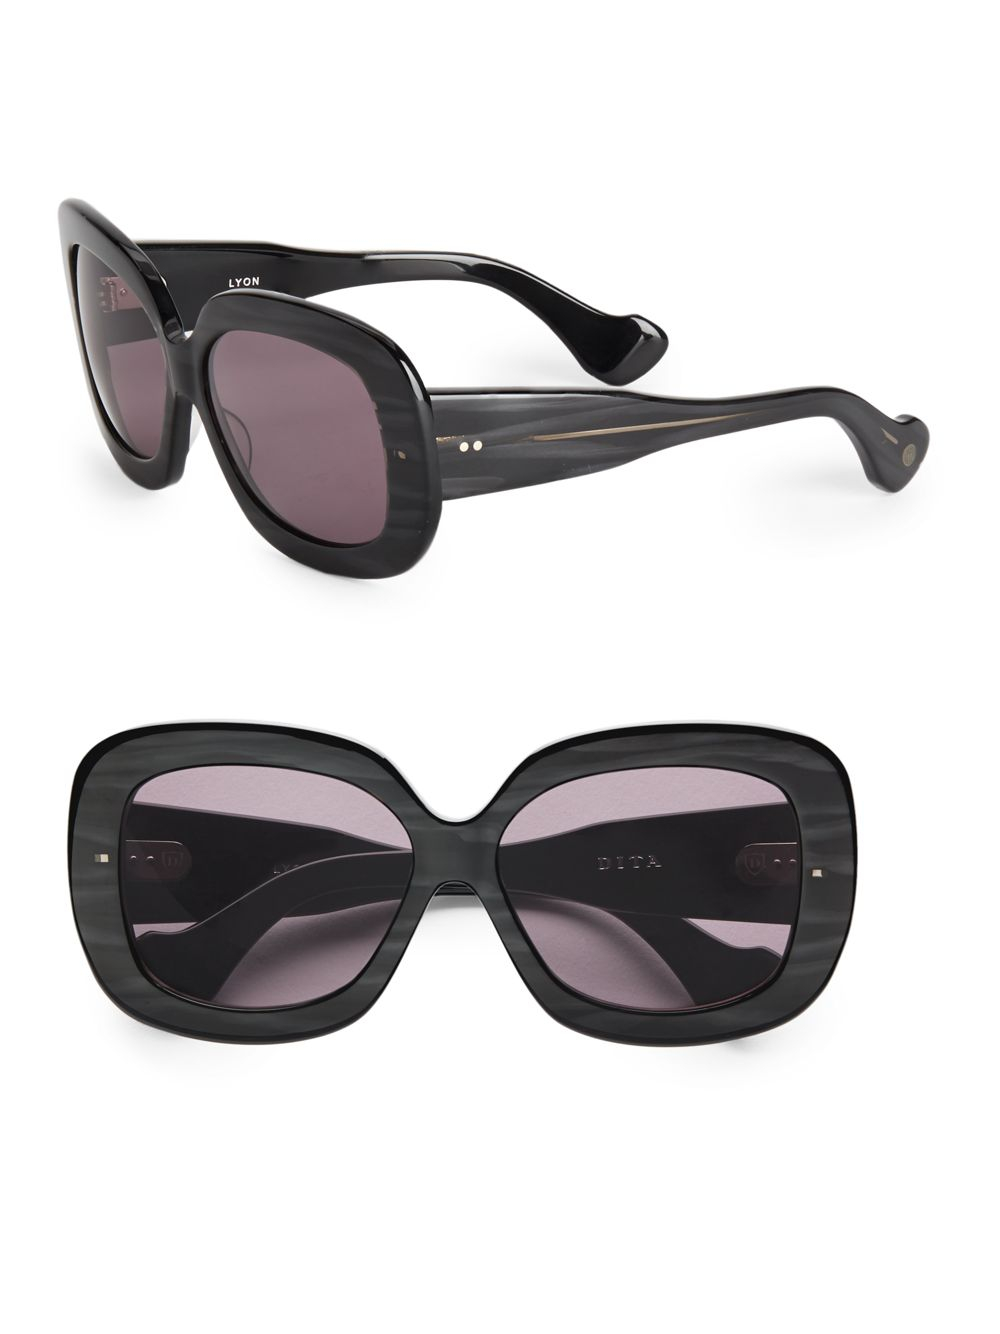 Lyst - Dita eyewear Lyon 57.5mm Oversized Square Sunglasses in Black